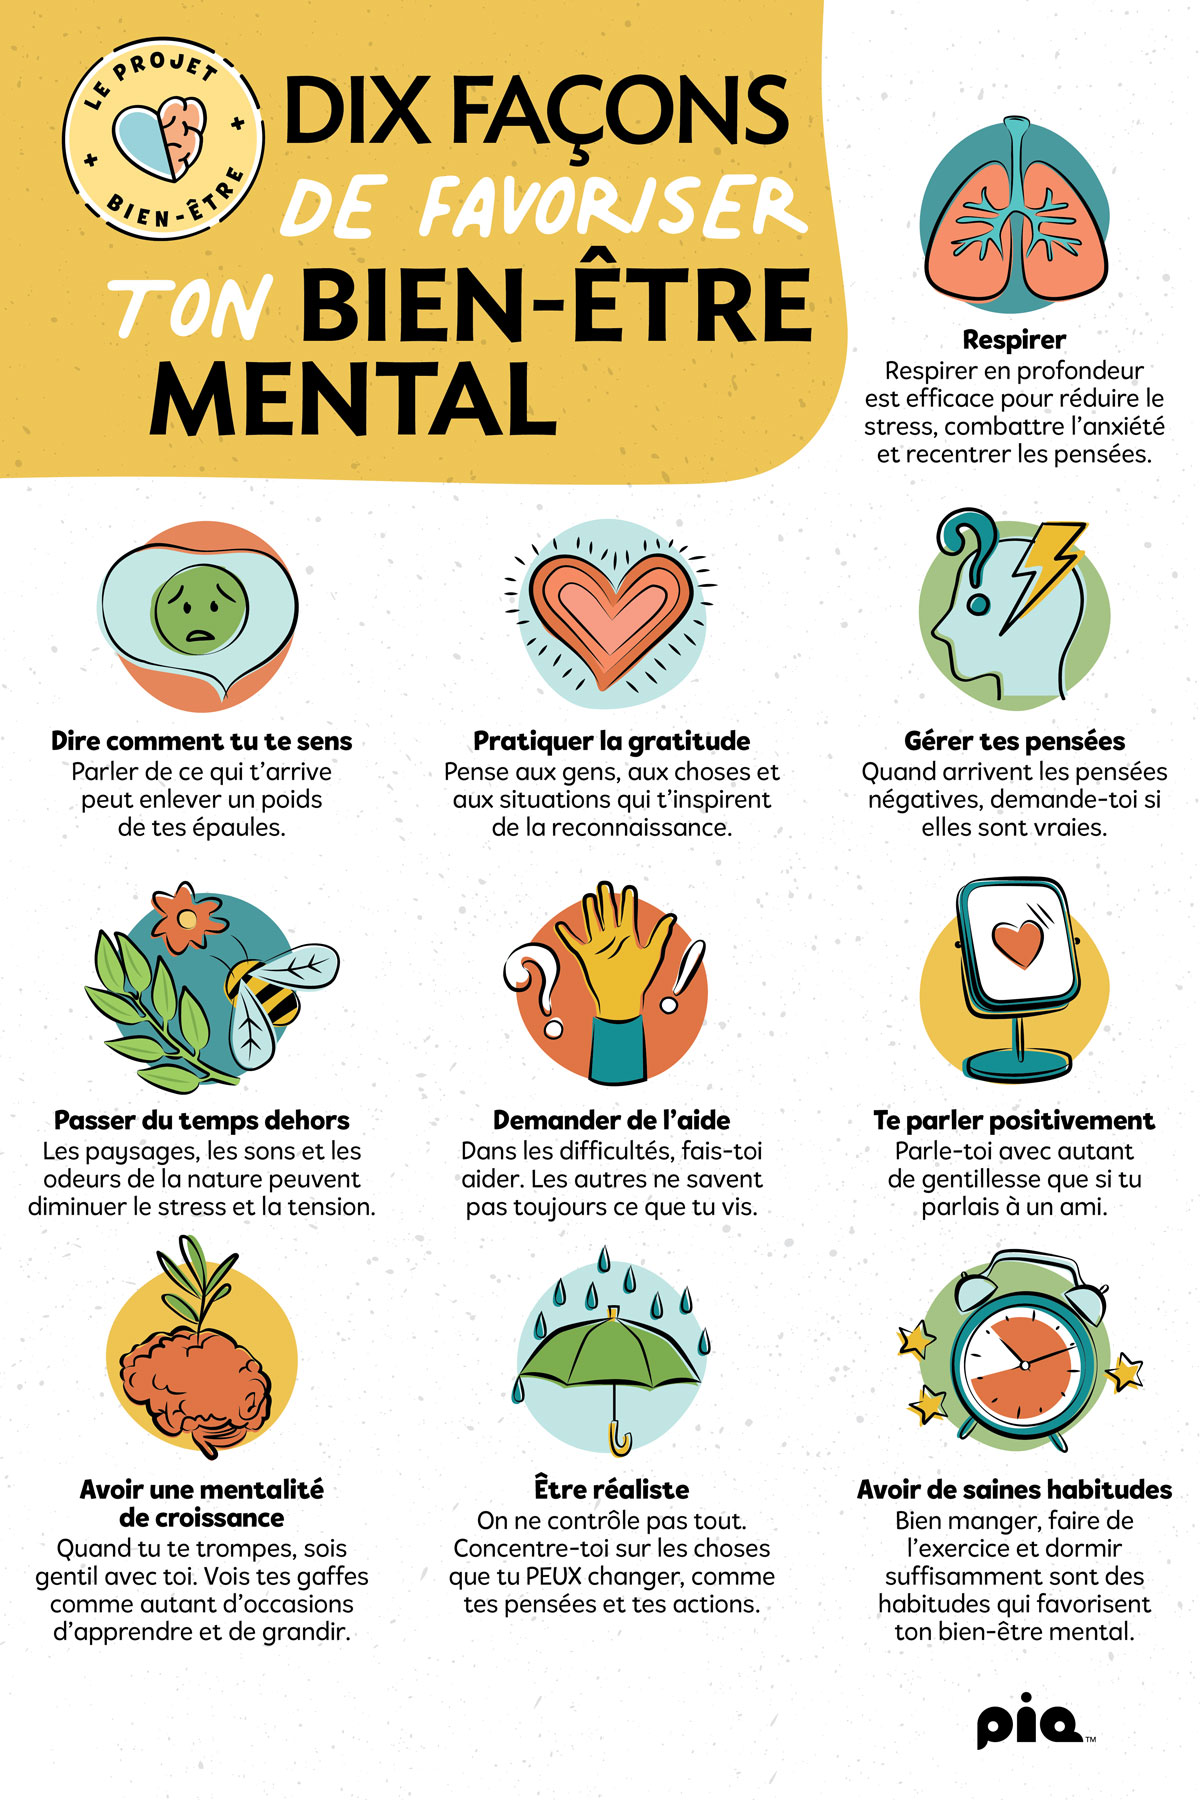 Dix façons de favoriser ton bien-être mental